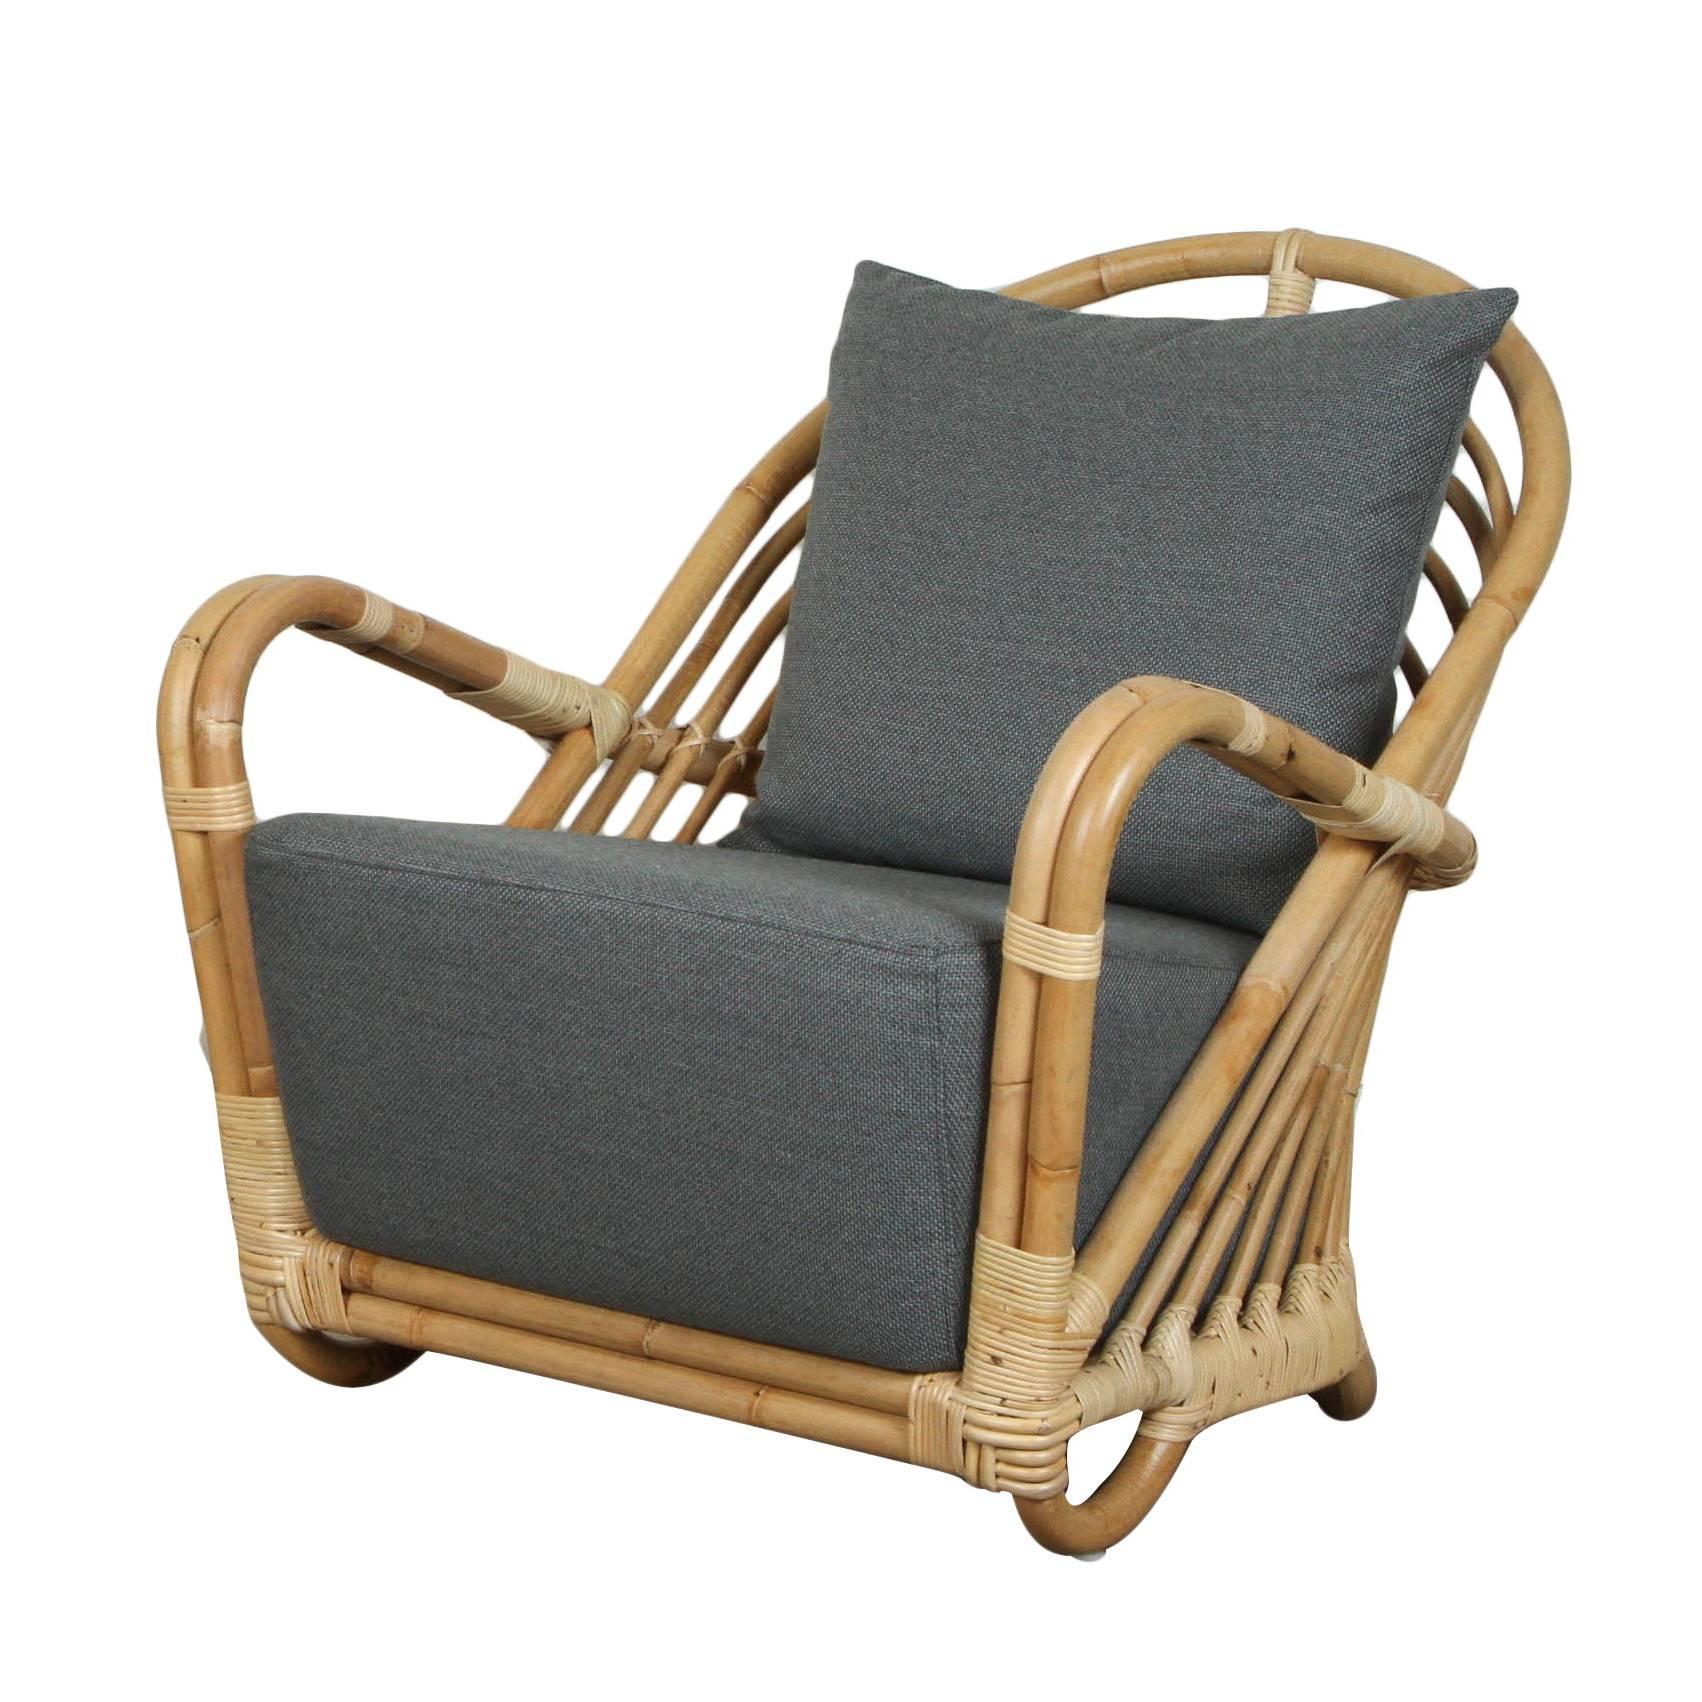 Charlottenborg Chair by Arne Jacobsen